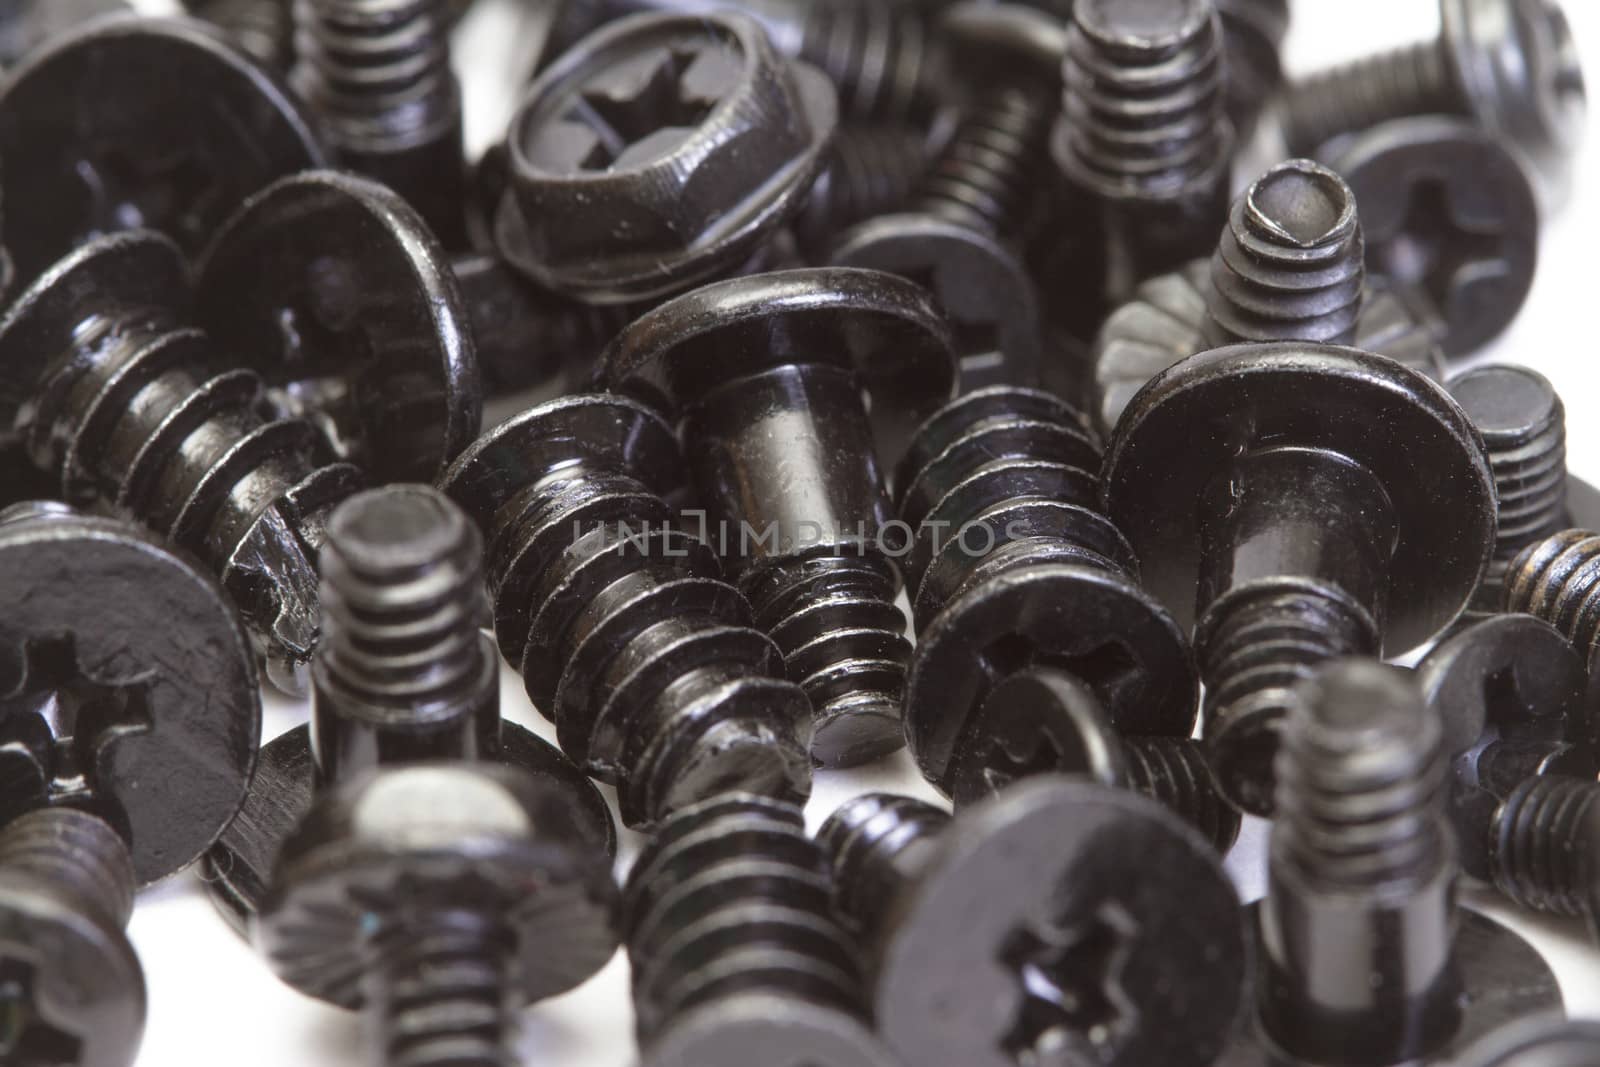 Metallic screws as background